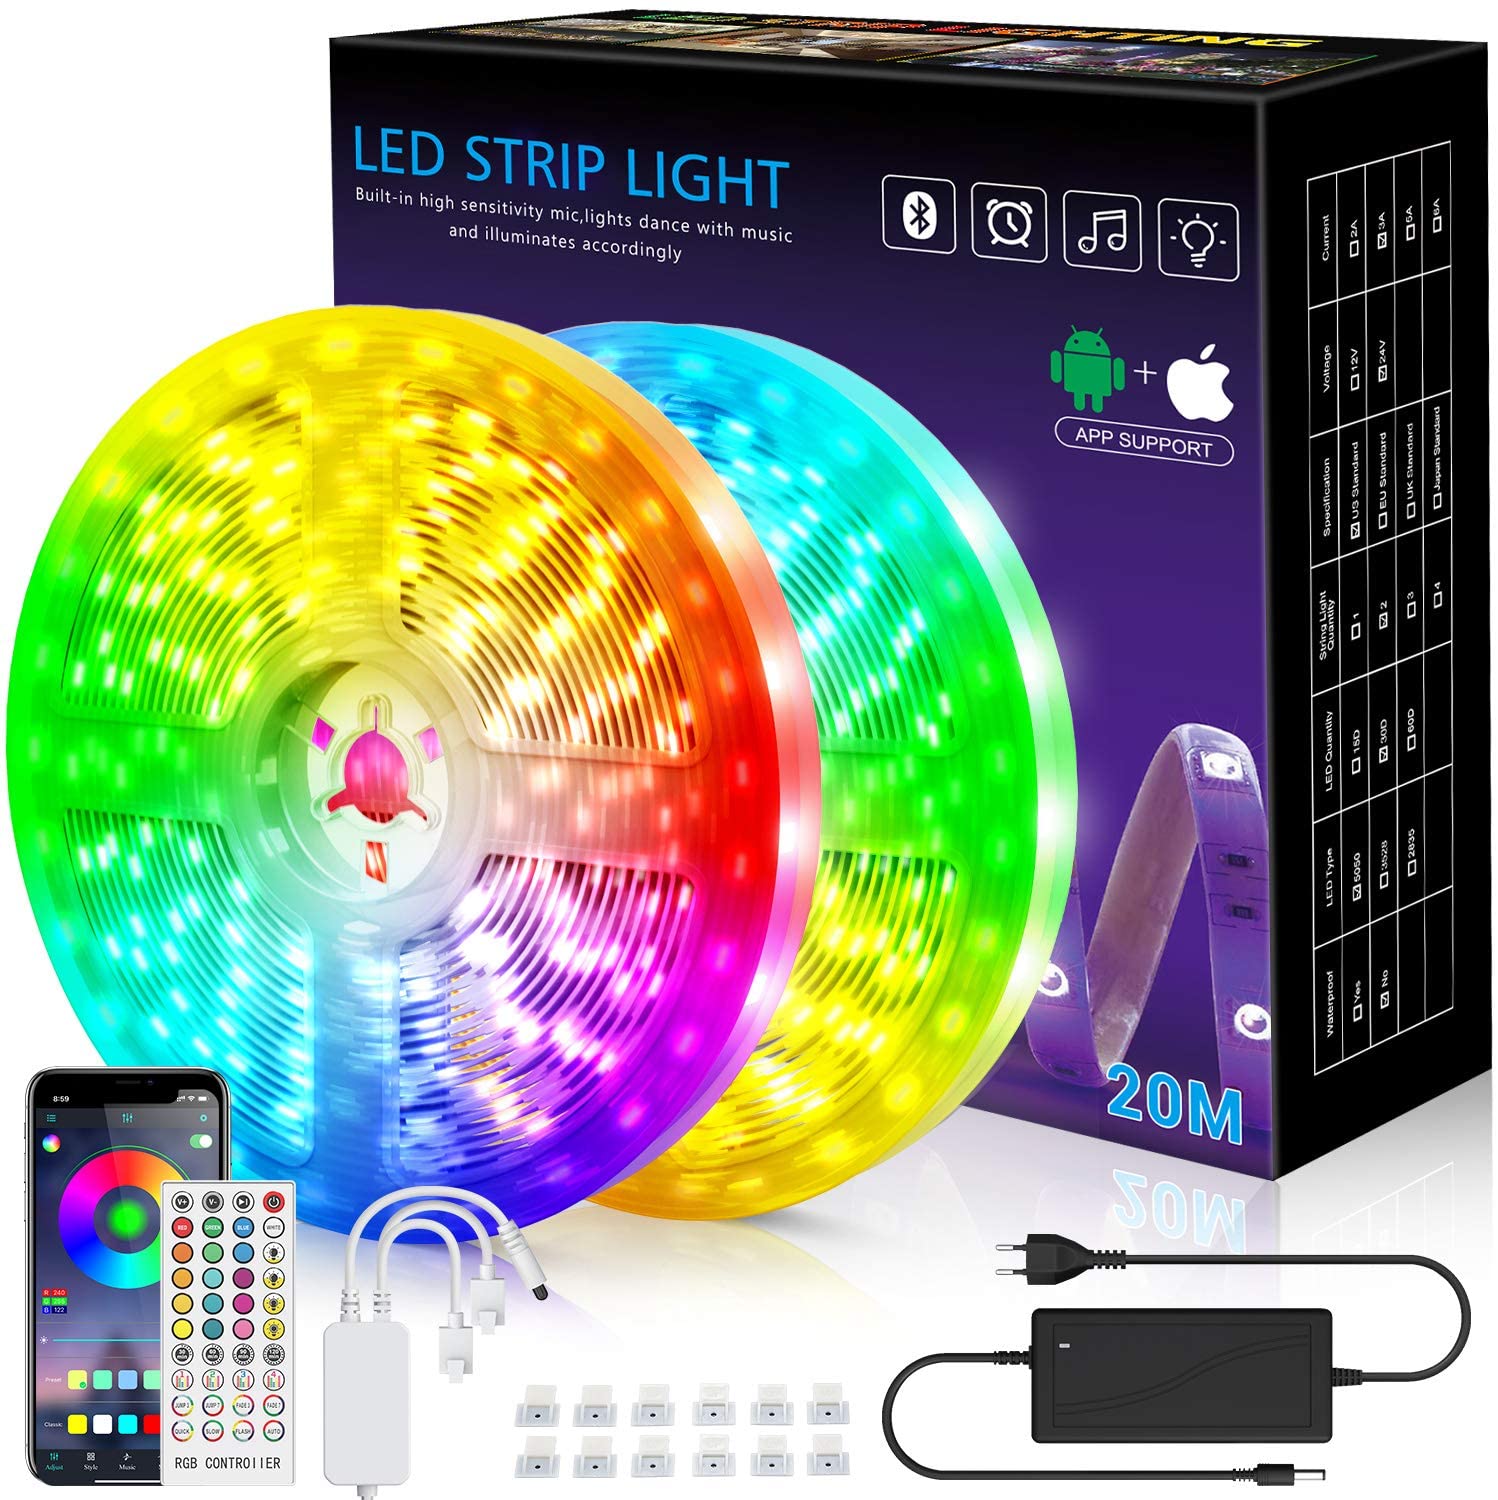 https://www.ledxx.com/image/cache/catalog/product/striplight/led-strip-20m-rgb-1498x1500.jpg